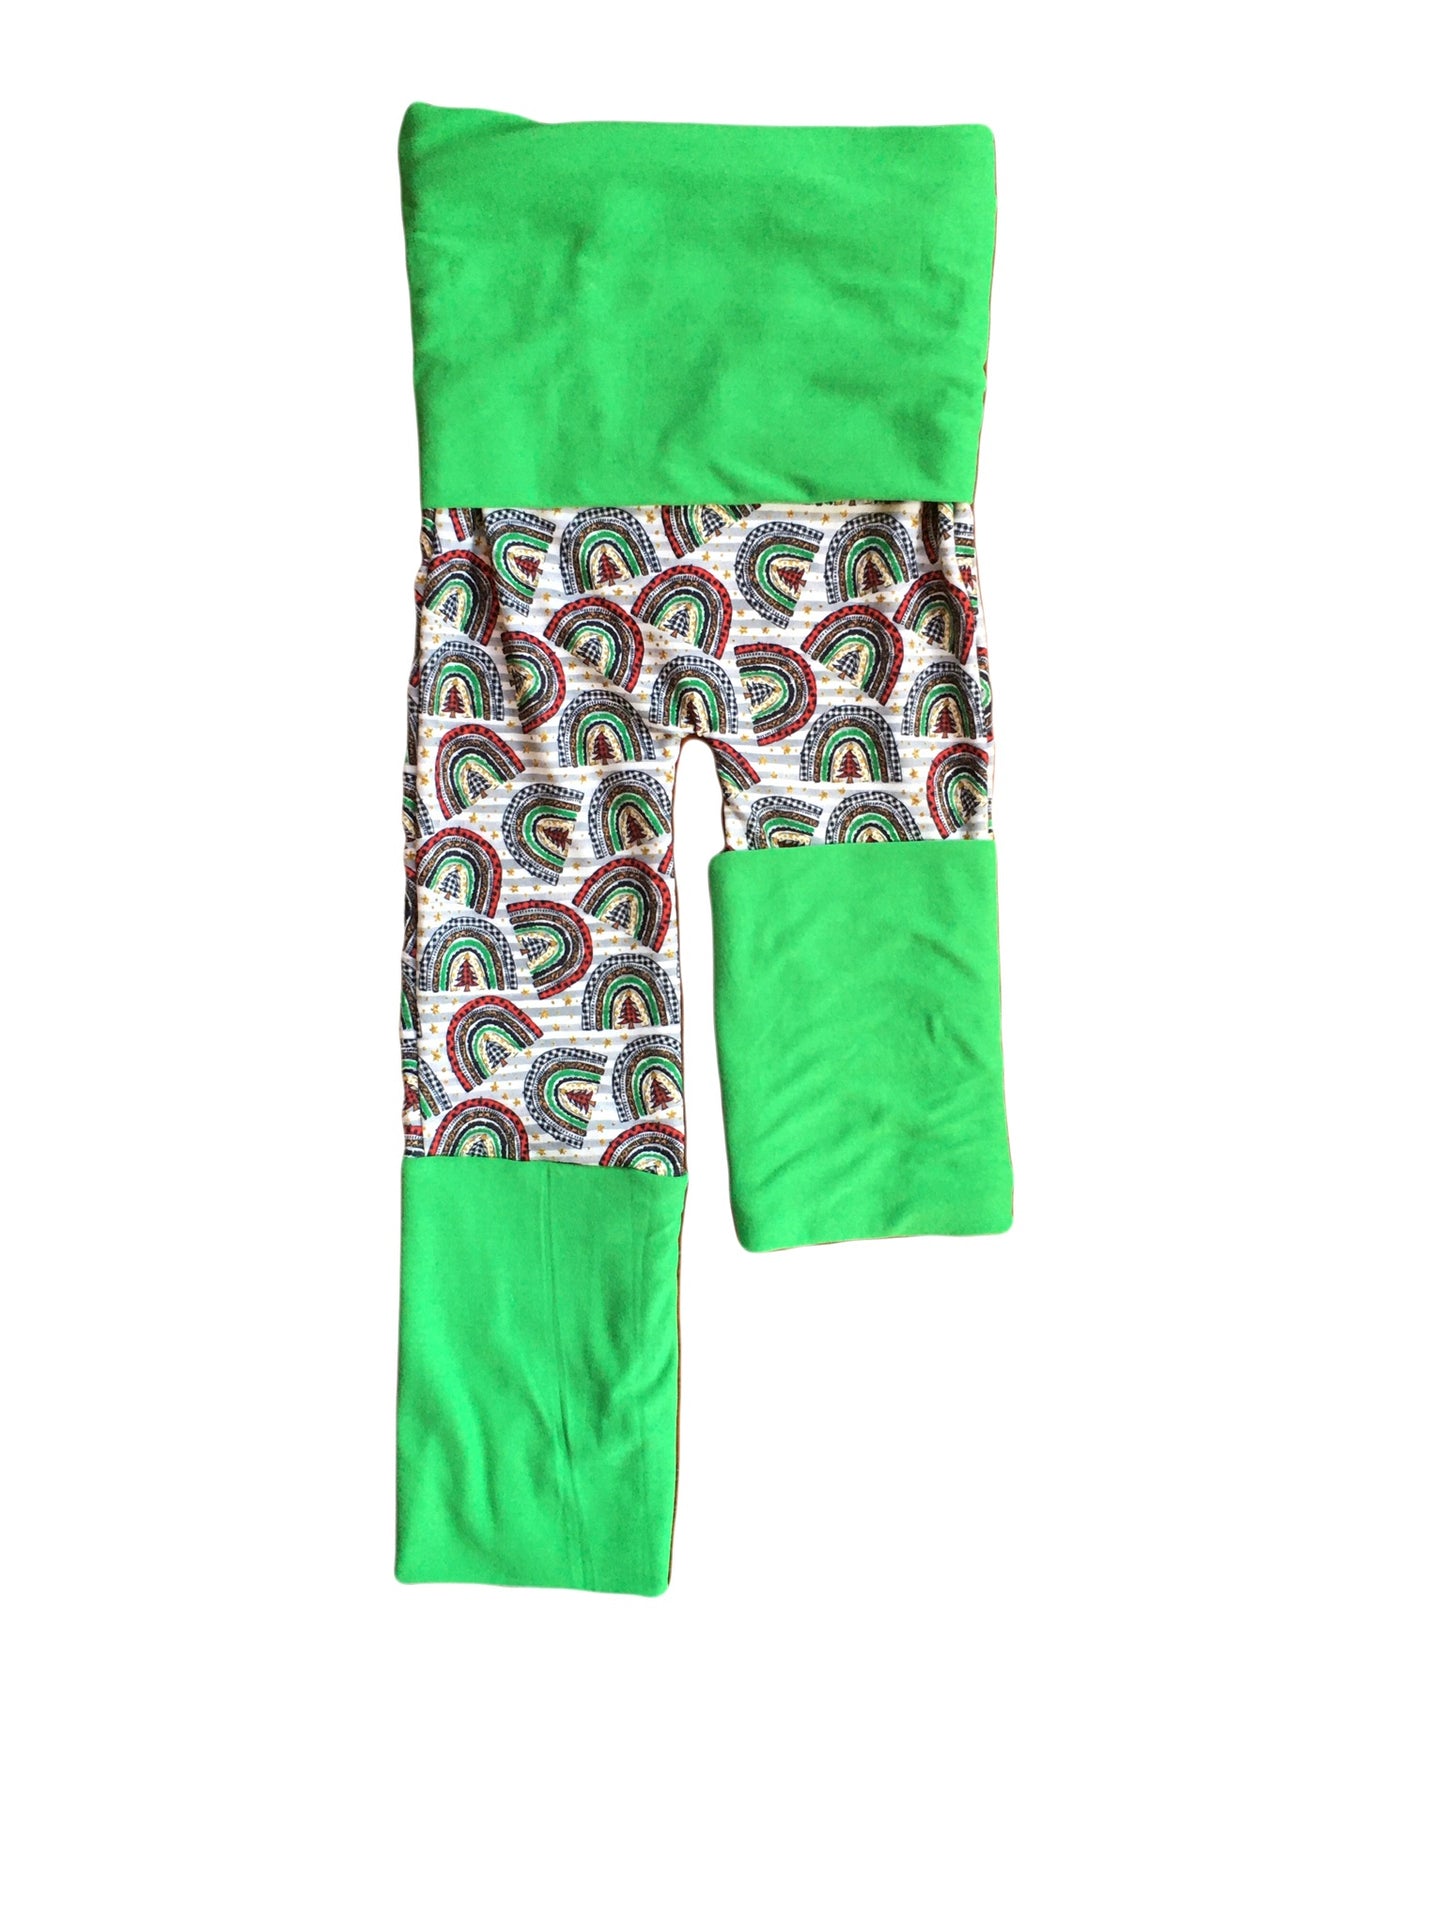 Adjustable Pants - Christmas Rainbow with Green